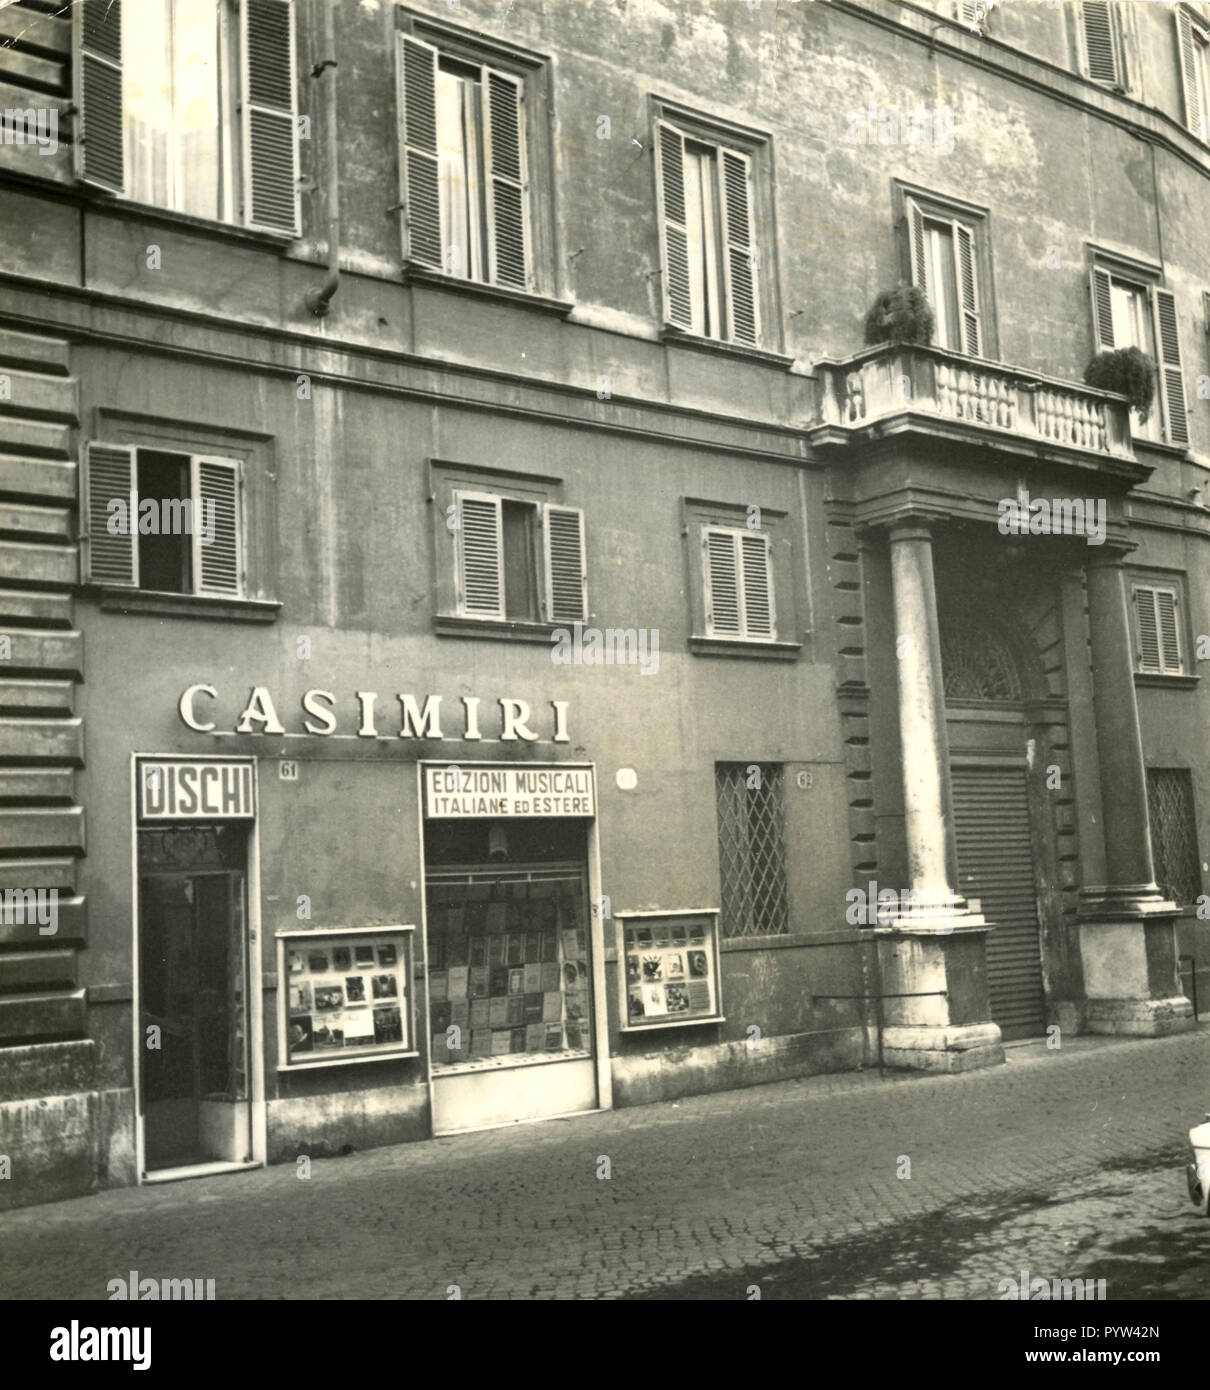 Casimiri Record Shop, Rom, Italien 1950 s Stockfoto